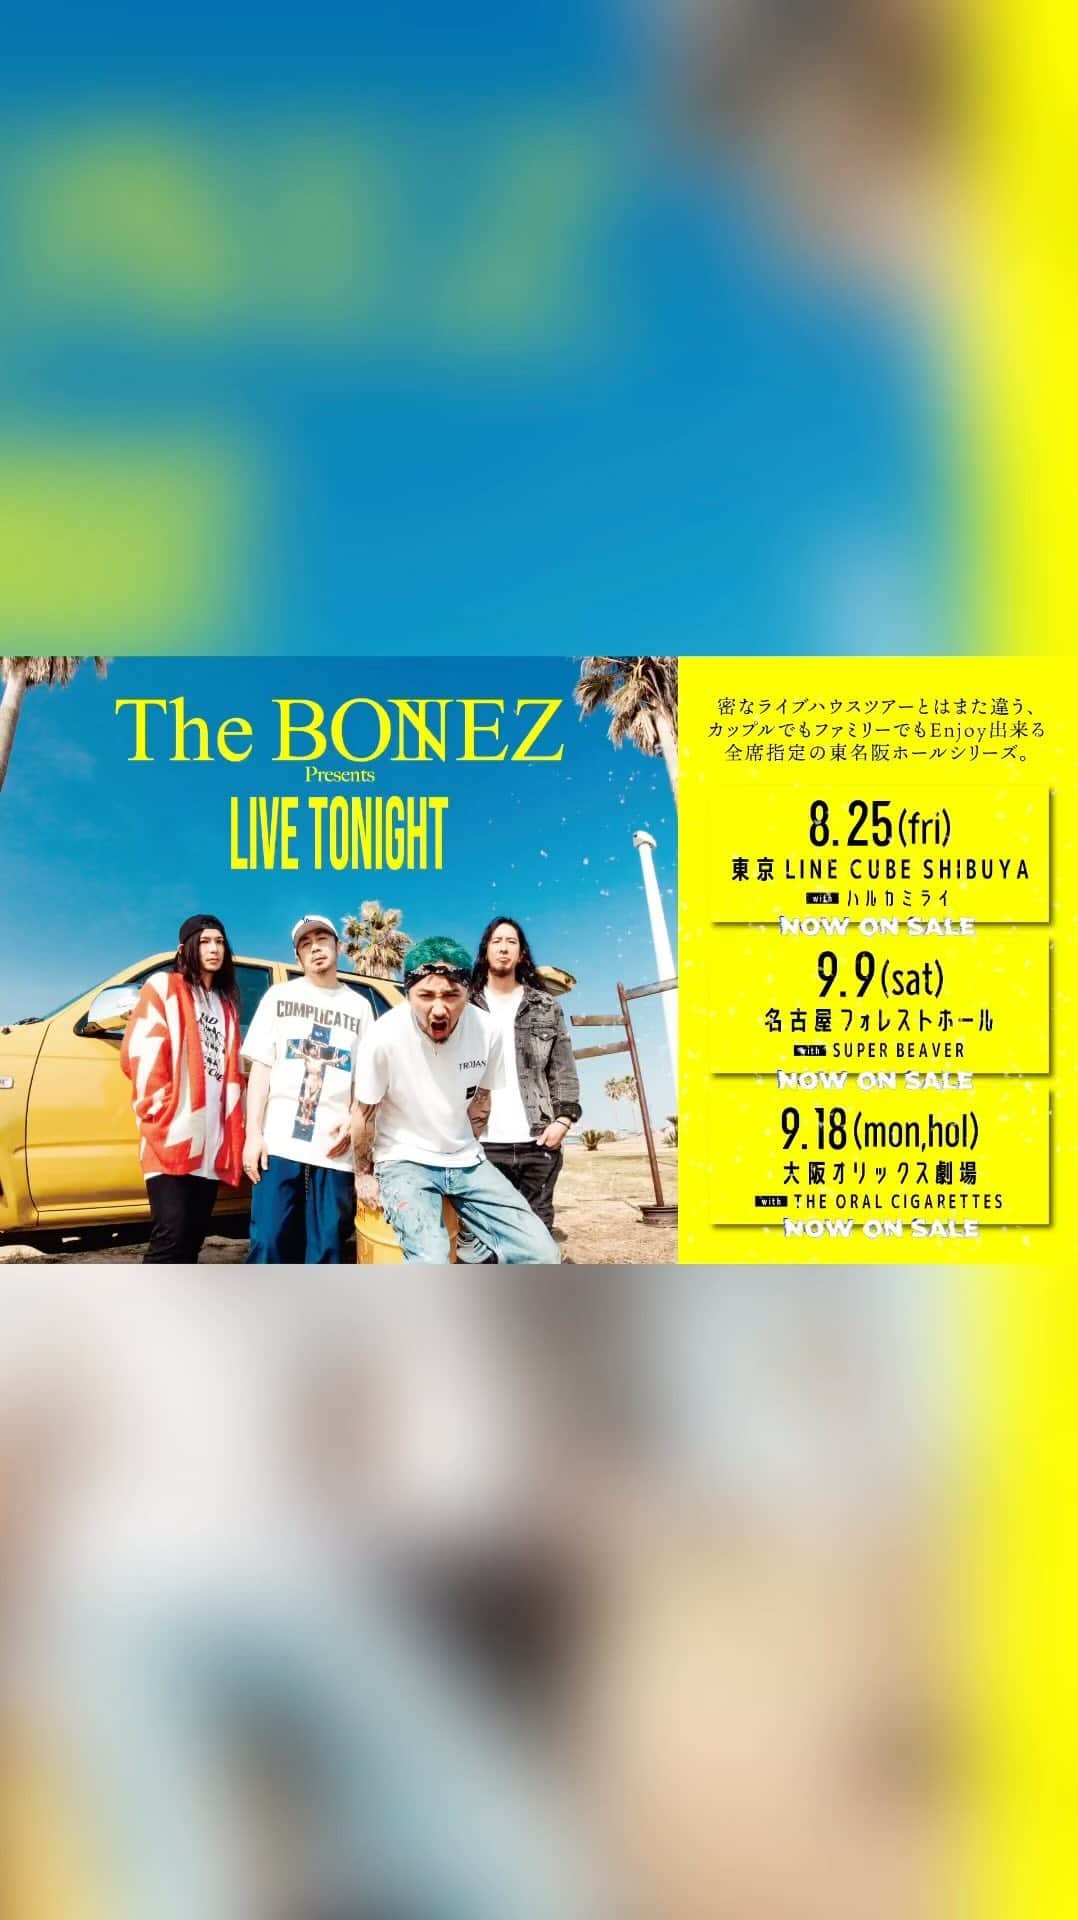 The BONEZのインスタグラム：「. ◤◢◤◢◤◢◤◢◤◢◤◢◤◢  The BONEZ Presents    LIVE TONIGHT  ◤◢◤◢◤◢◤◢◤◢◤◢◤◢ プレイガイド3次先行受付開始 本日7/12(水)12時〜7/18 (火)23時まで  e+: https://eplus.jp/thebonez/l.t.w/  ローチケ：https://l-tike.com/thebonezticket-l-t-w/ ぴあ: http://w.pia.jp/t/thebonez-pr/l.t.w/  Directed by @yutaro_artlovemusic   ＃thebonez #骨から気合い」